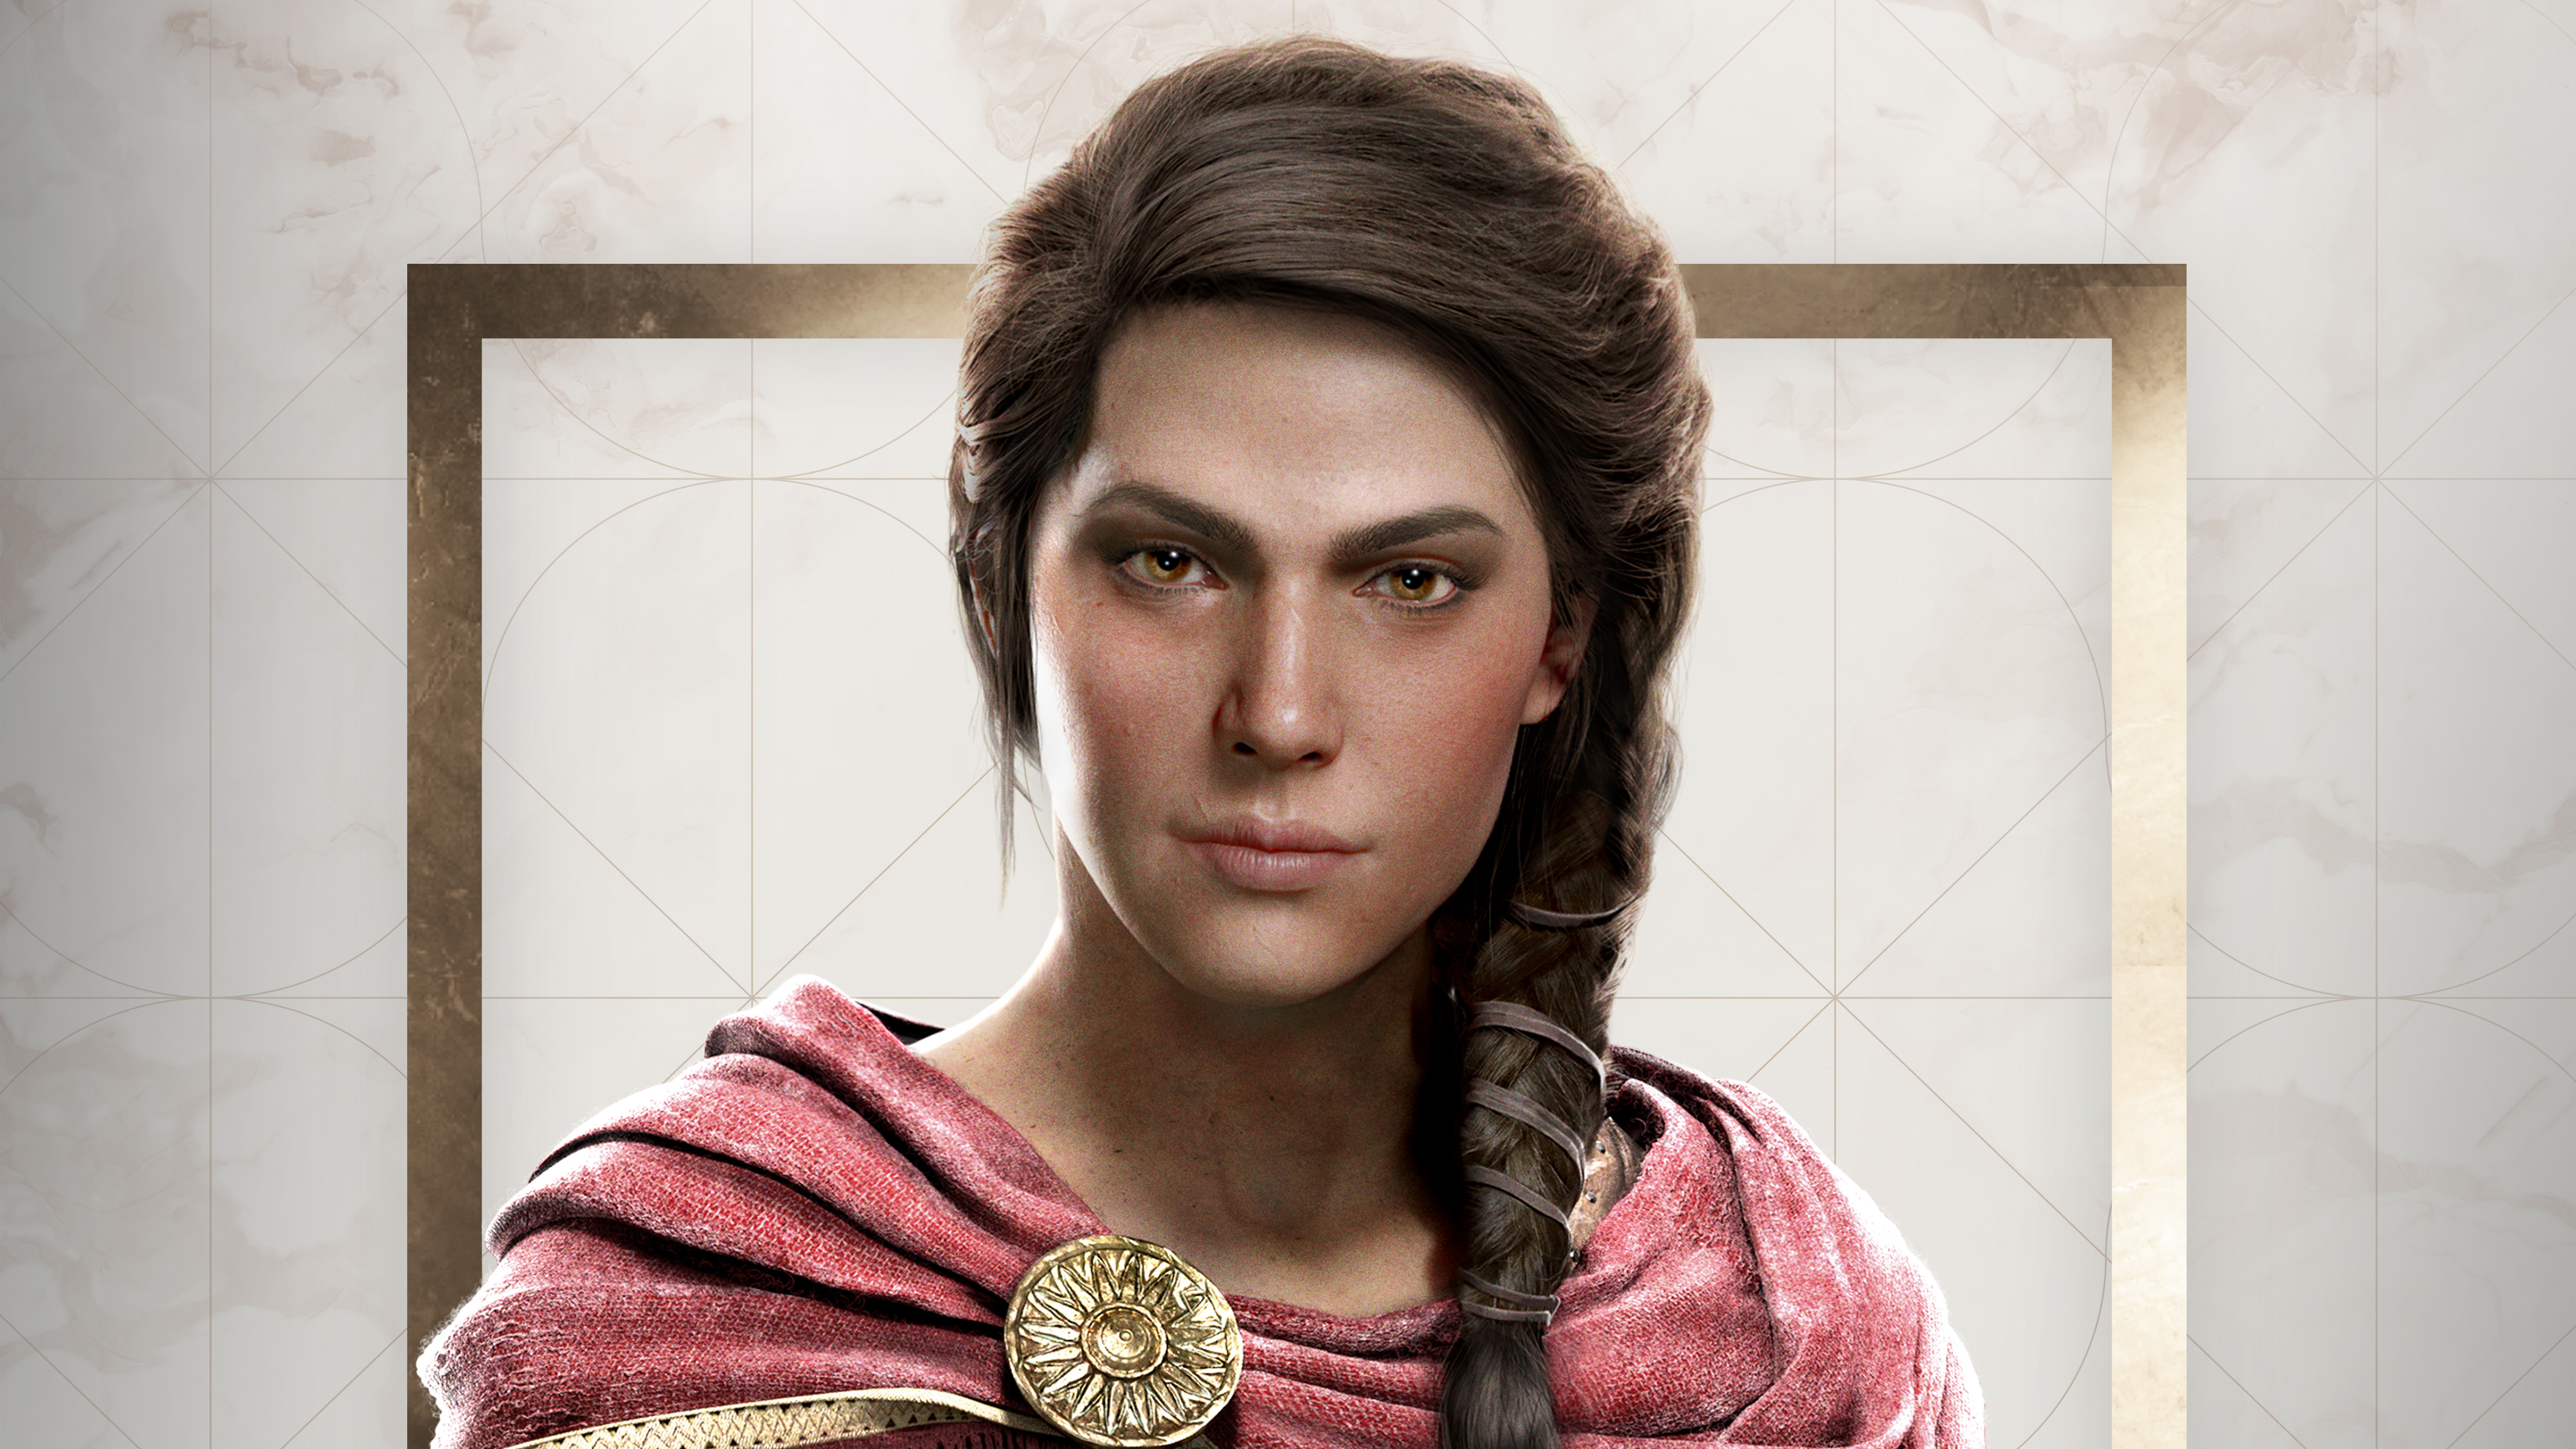 Kassandra Assassins Creed Odyssey K Hd Games K Wallpapers Images Hot